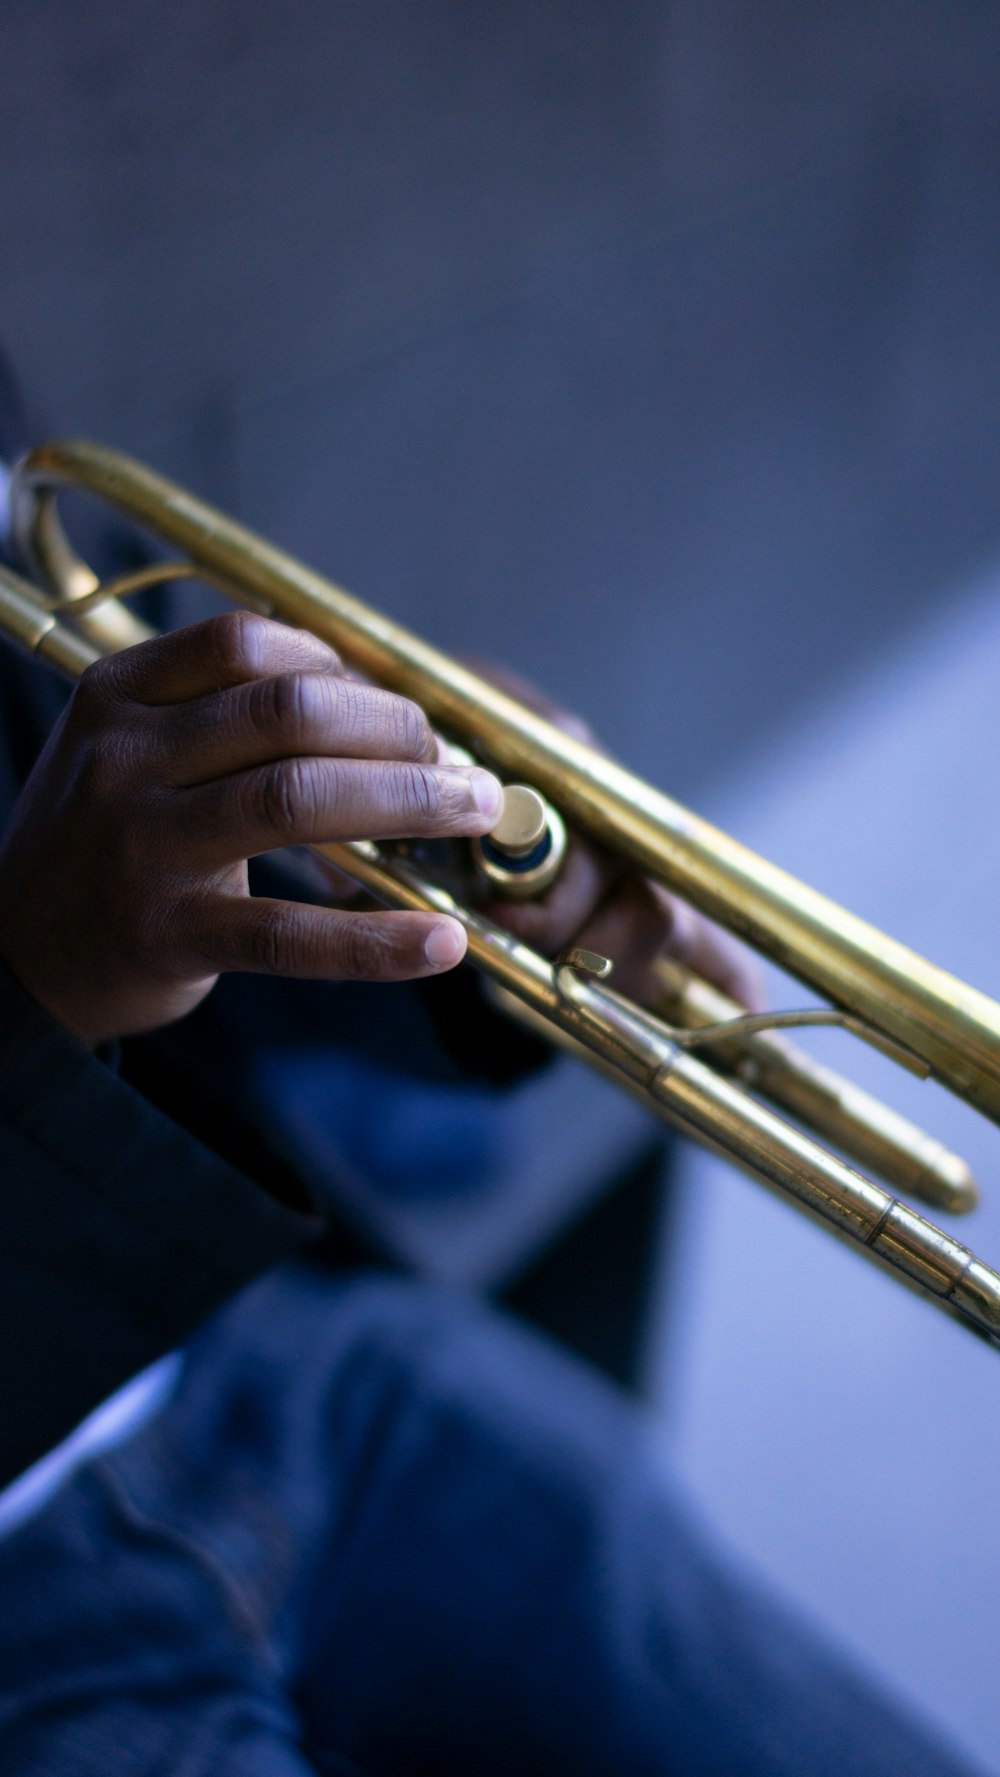 gold trumpet on blue textile